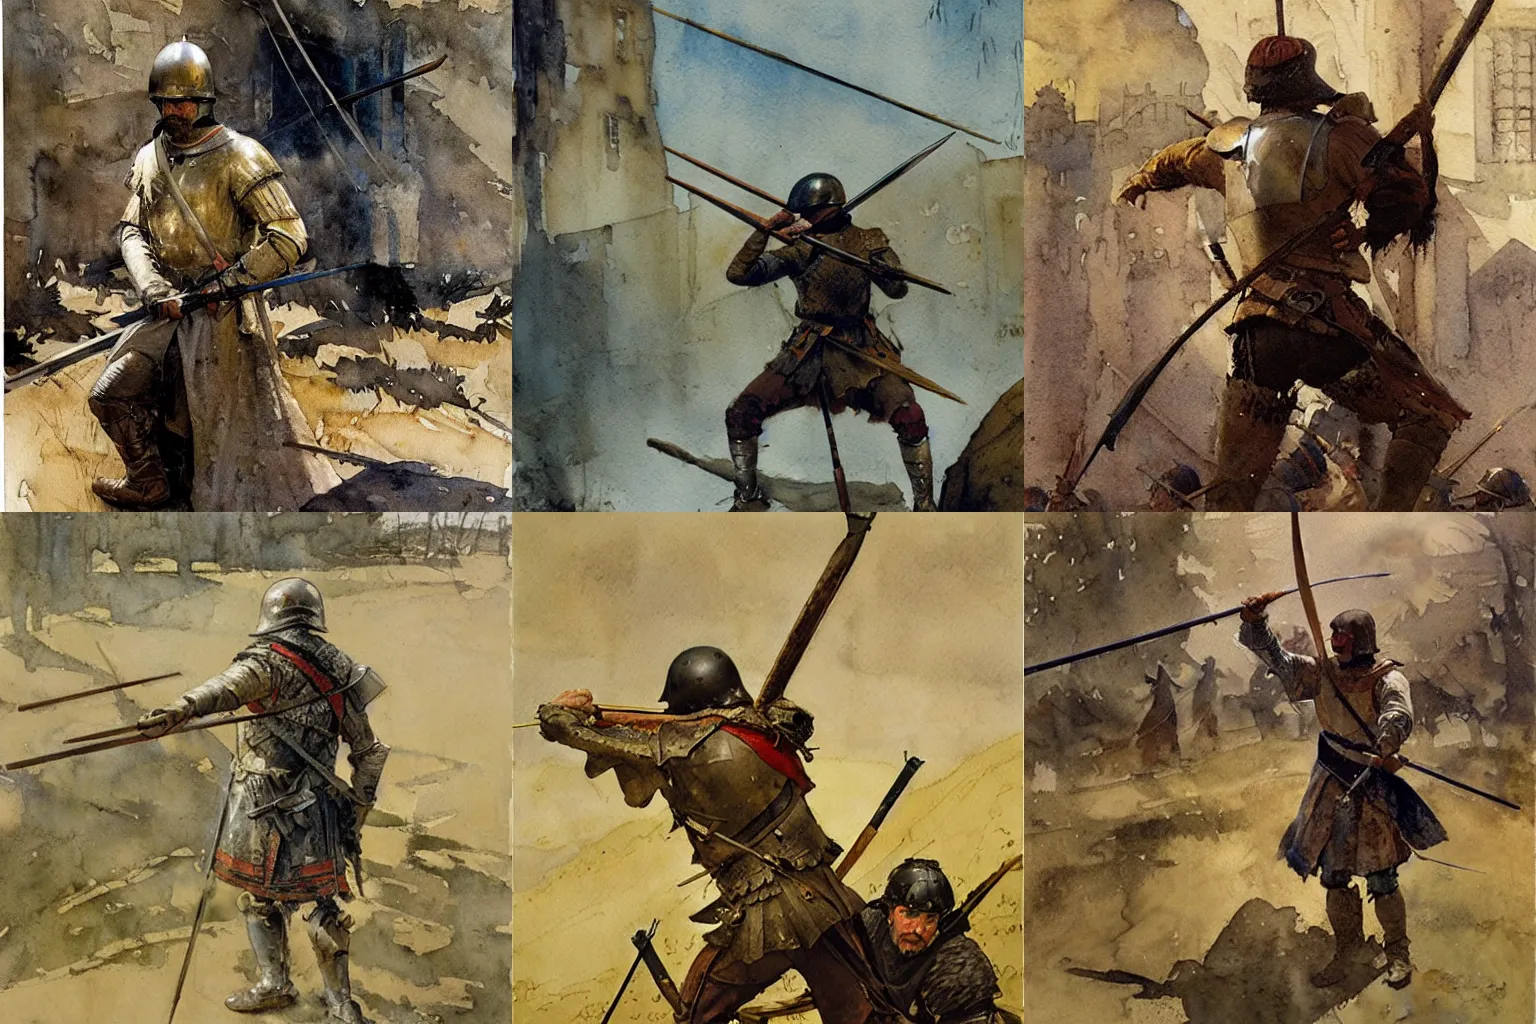 Prompt: medieval soldier aiming bow, richard schmid, jeffery catherine jones, ruan jia, greg manchess, ridley scott, lost edges, n. c. wyeth, watercolor